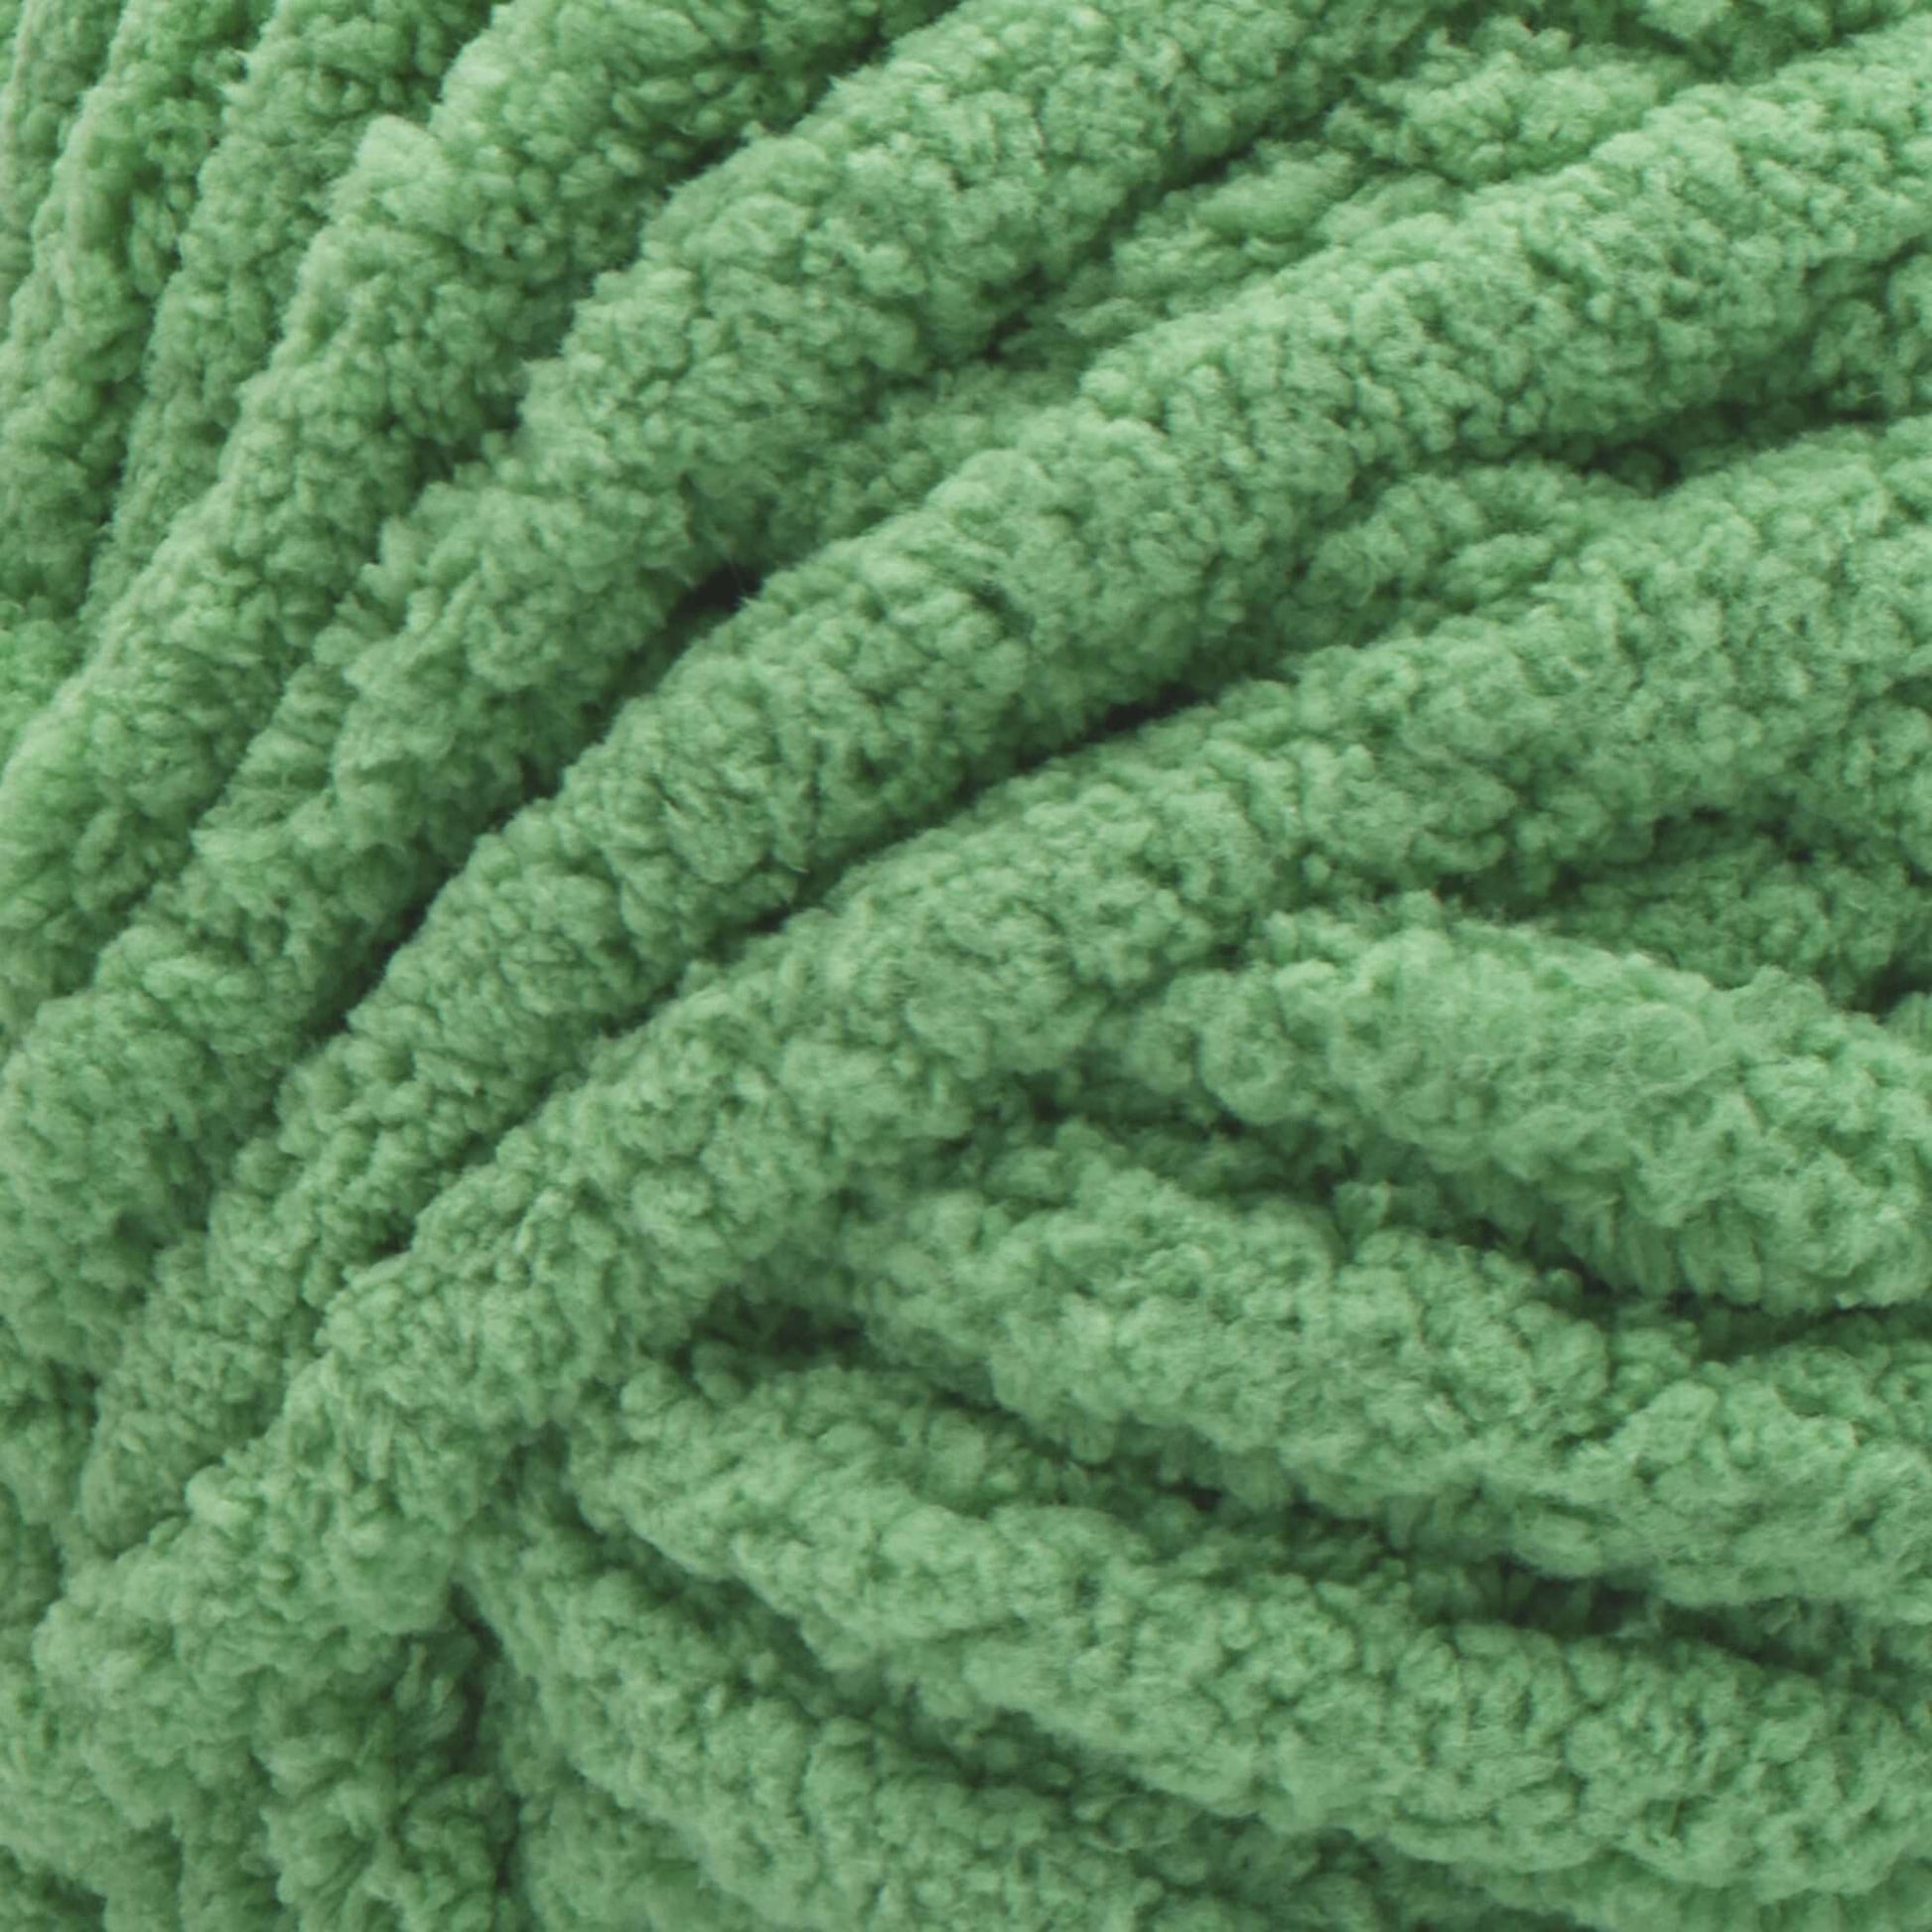 Bernat Blanket Extra Yarn (300g/10.5oz) - Clearance Shades* Grass